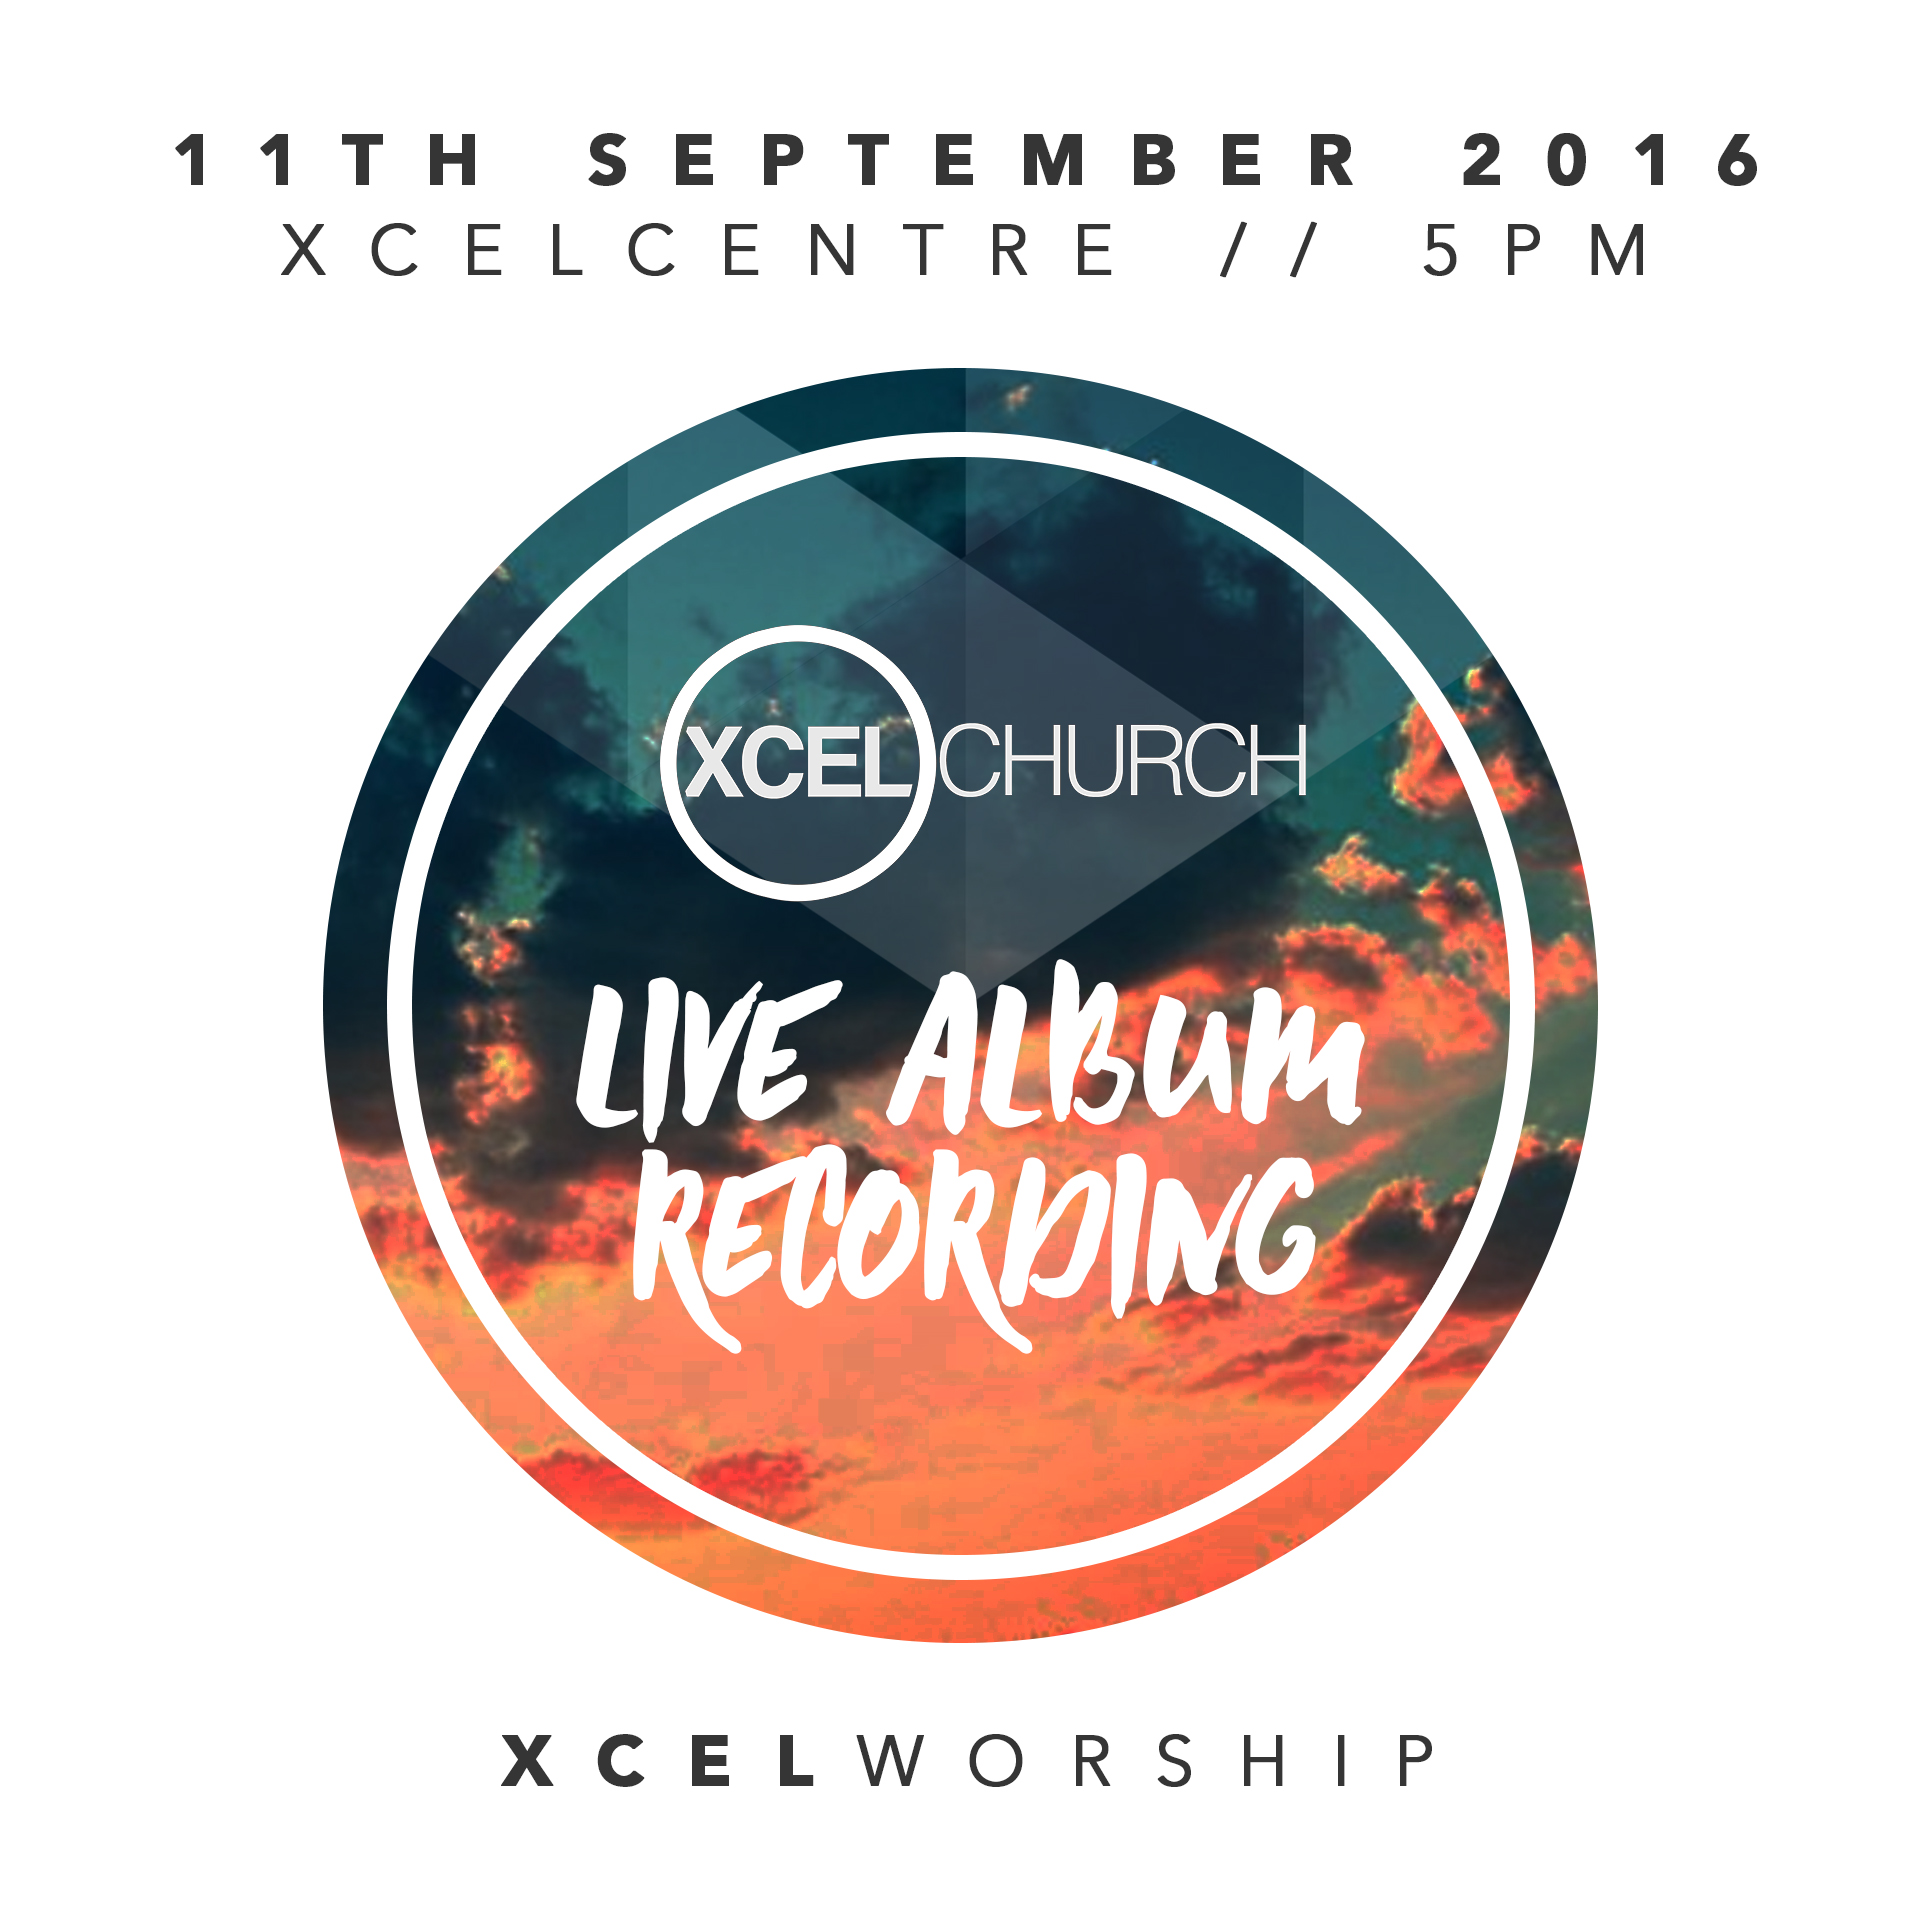 Live Worship Album Recording @ XCEL Church